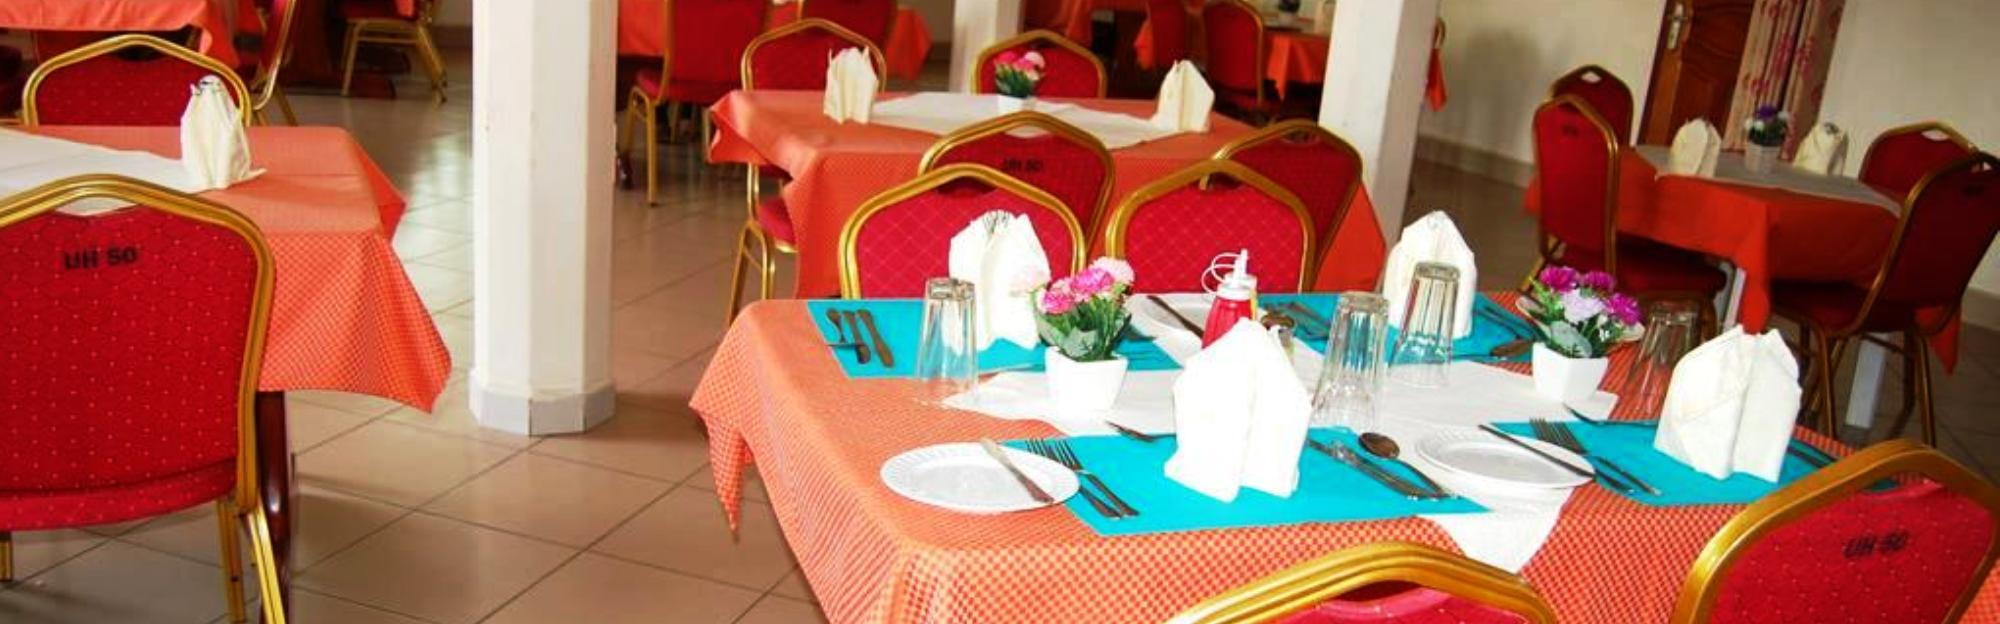 Uhuru 50 Hotel Conferences & Weddings